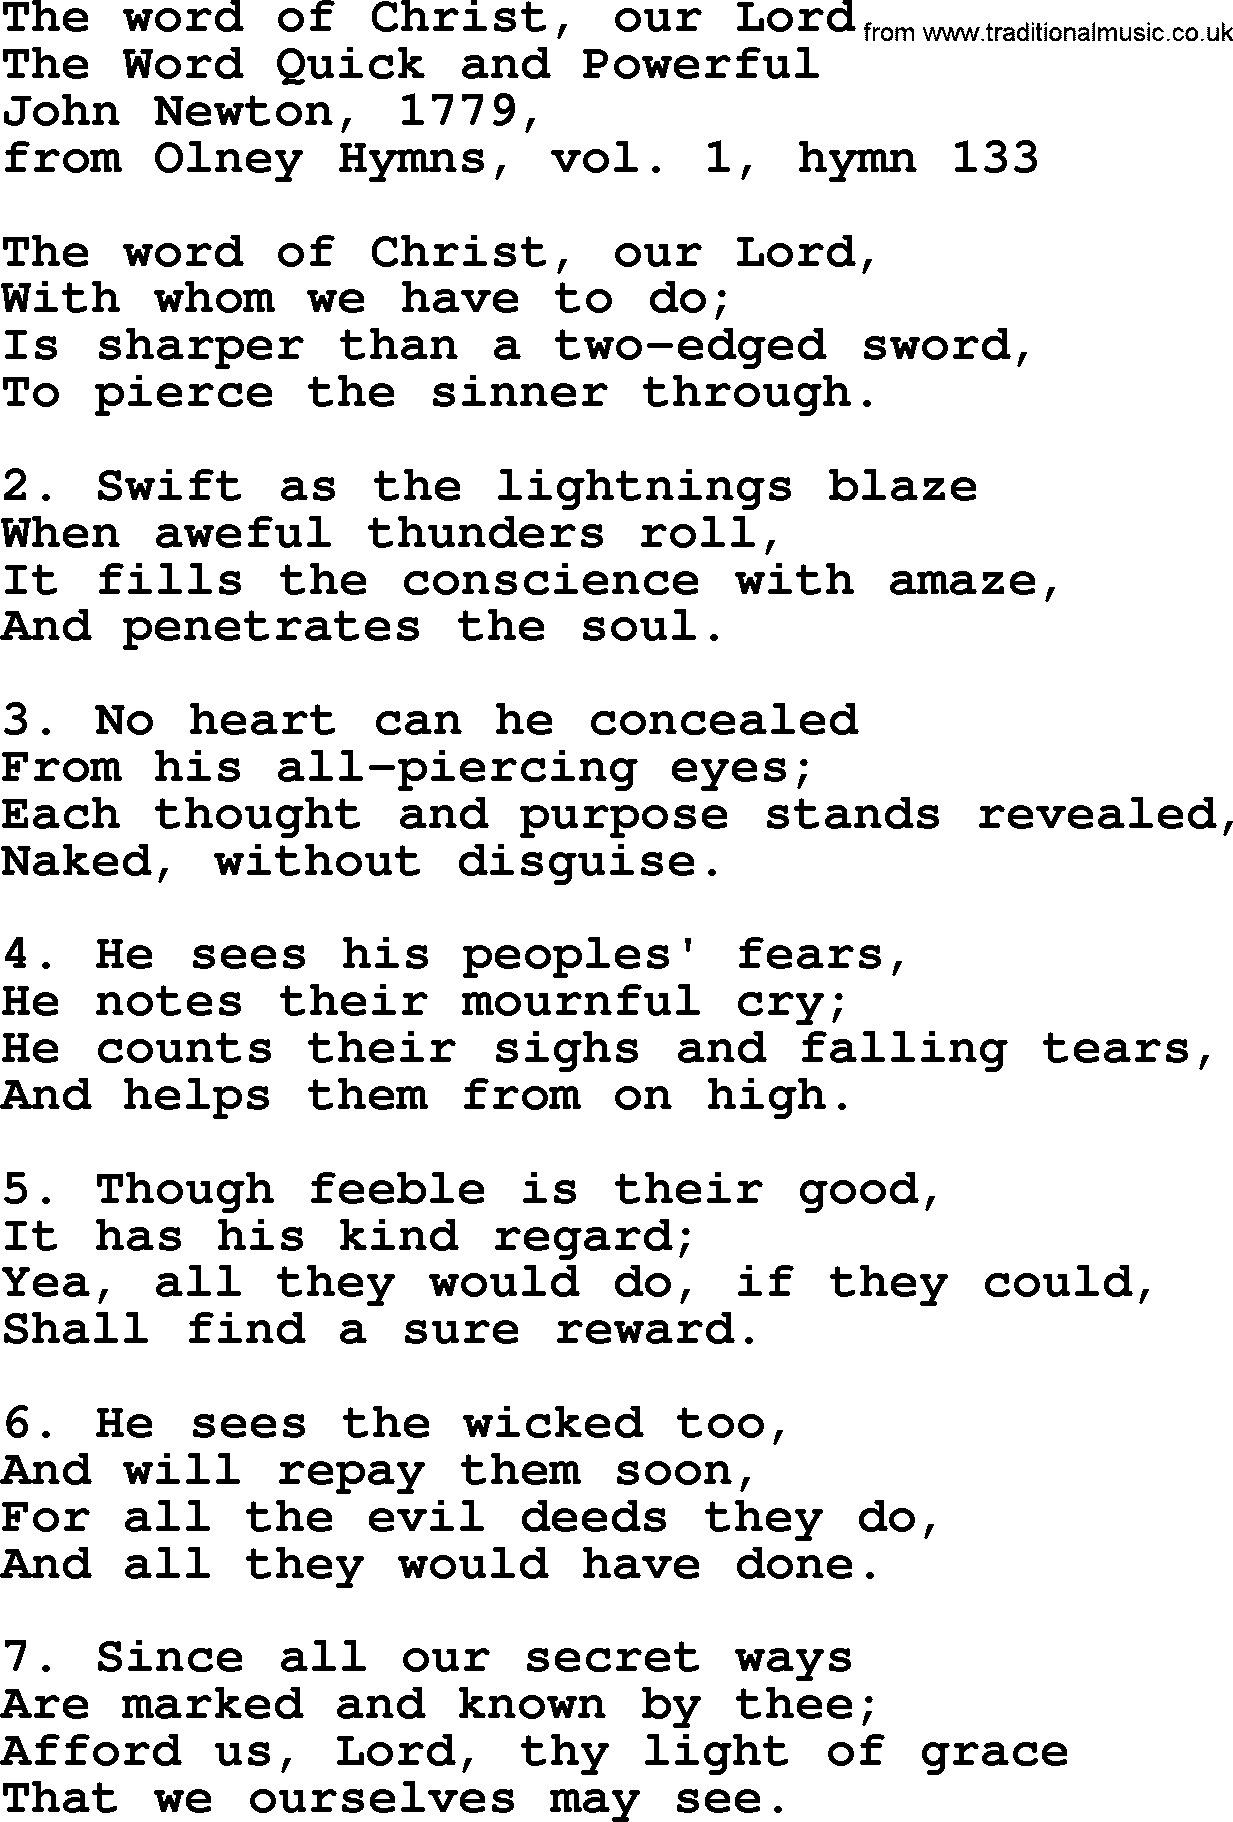 John Newton hymn: The Word Of Christ, Our Lord, lyrics